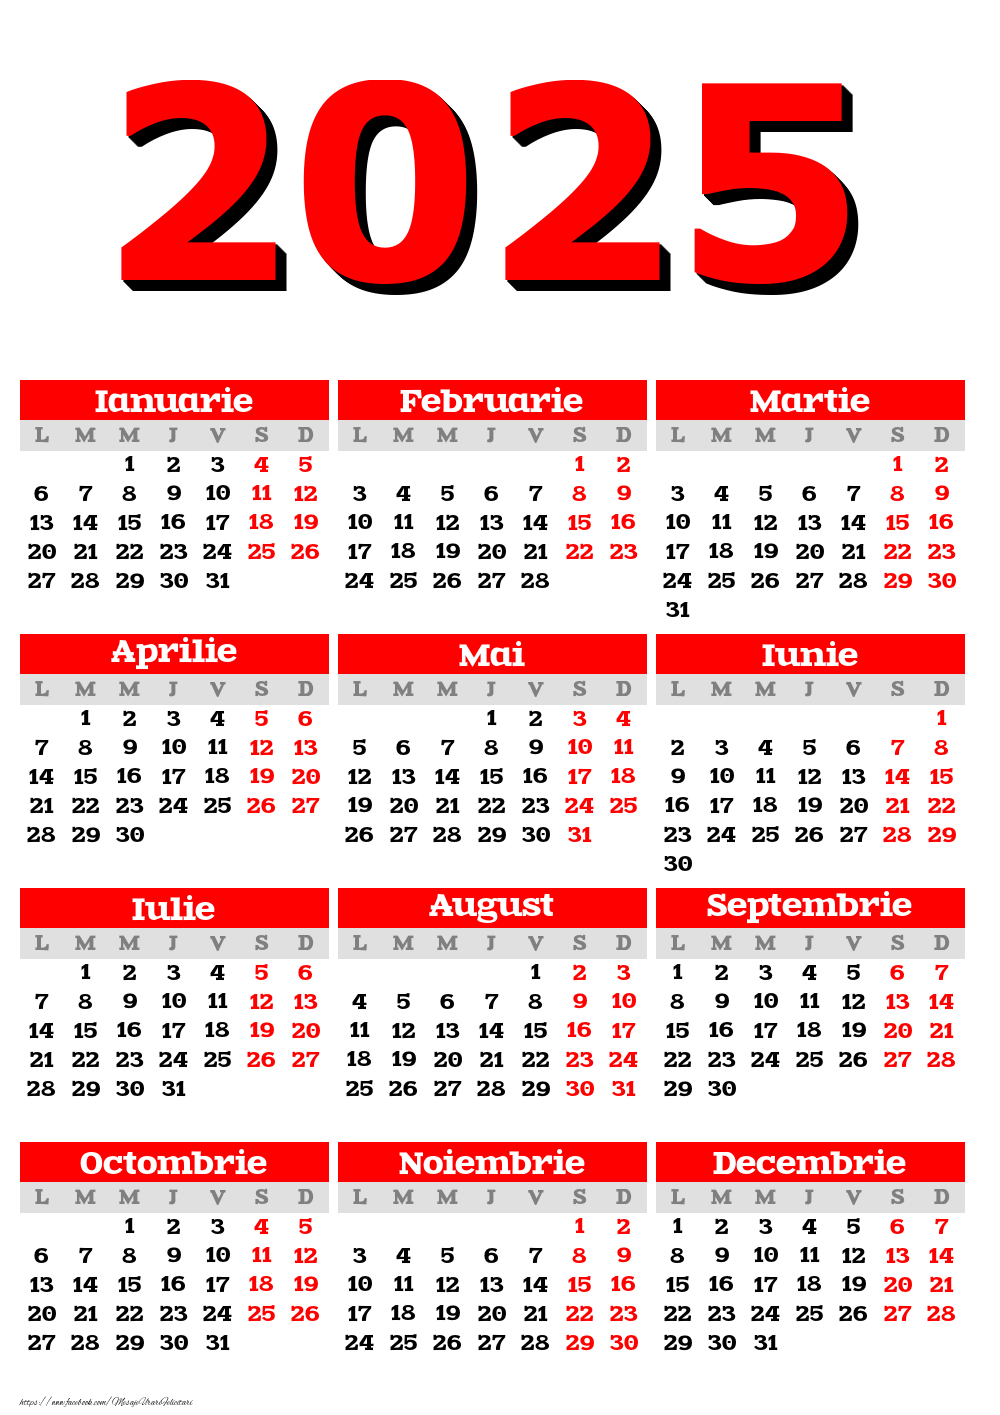 Imagini cu calendare - Calendar 2025 - Clasic Rosu - Model 0014 - mesajeurarifelicitari.com